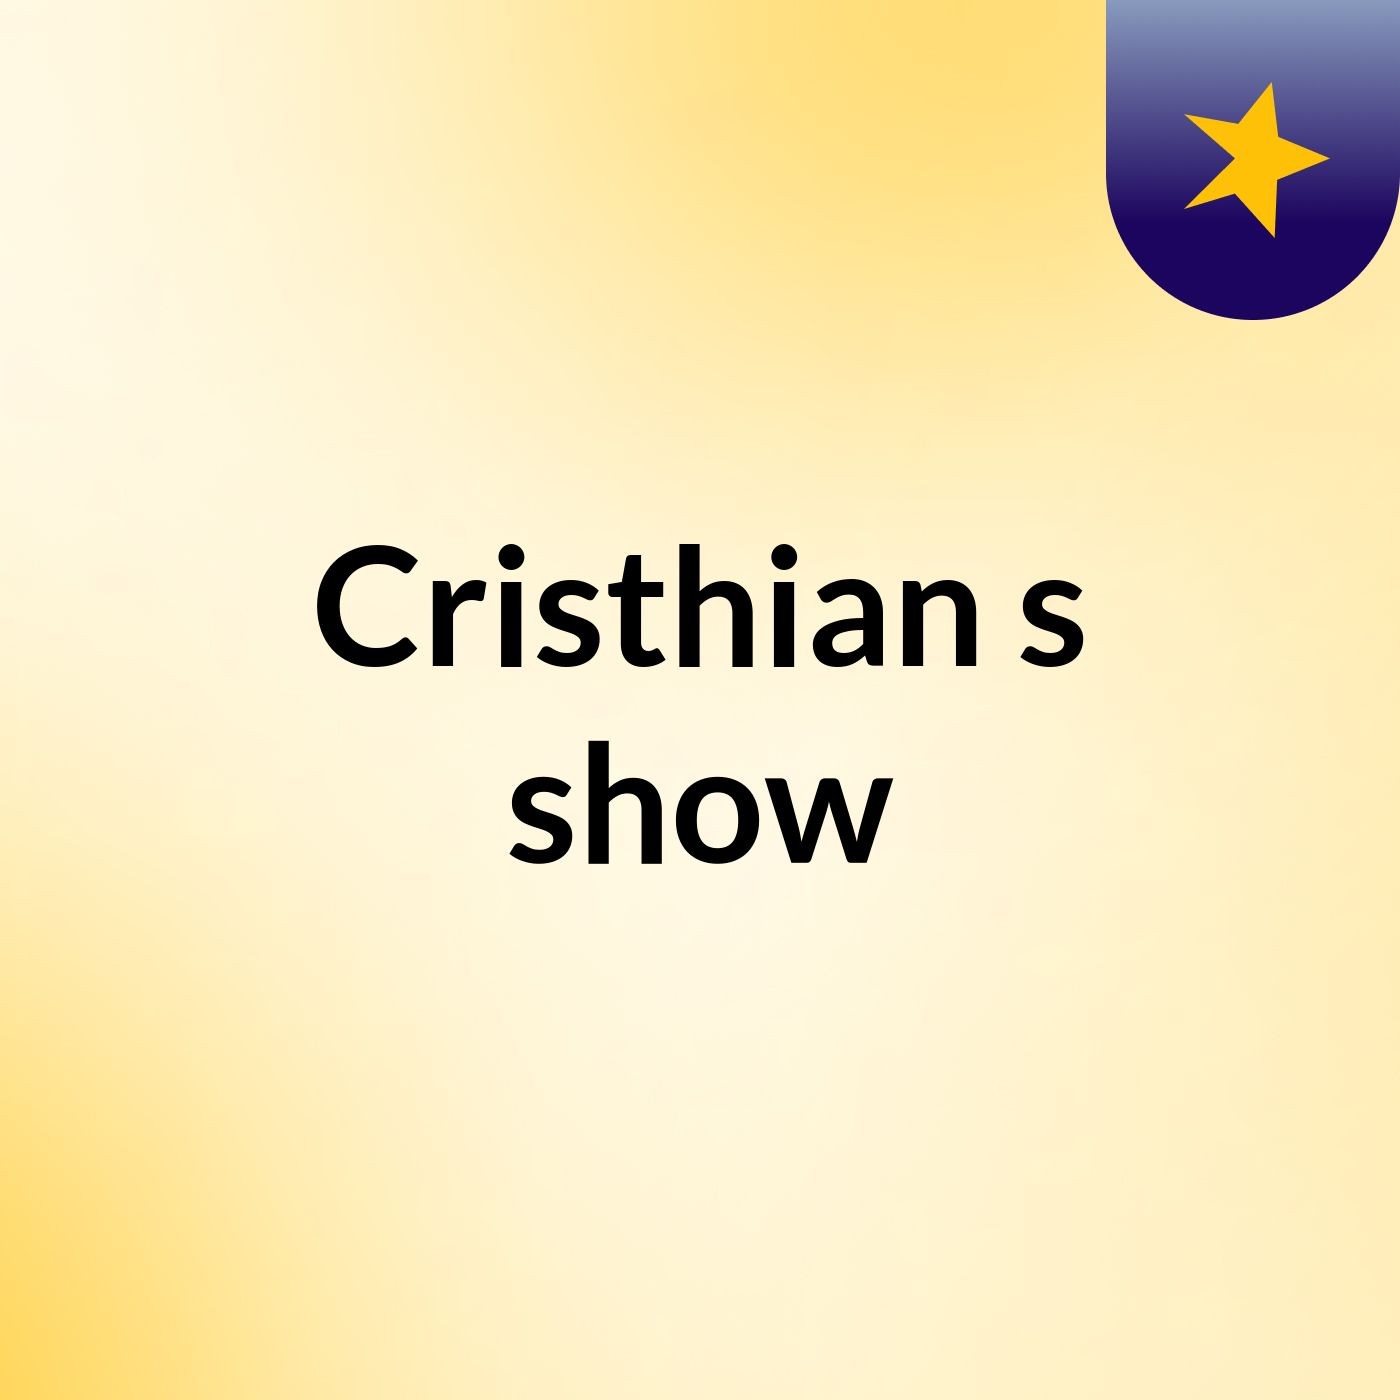 Cristhian's show